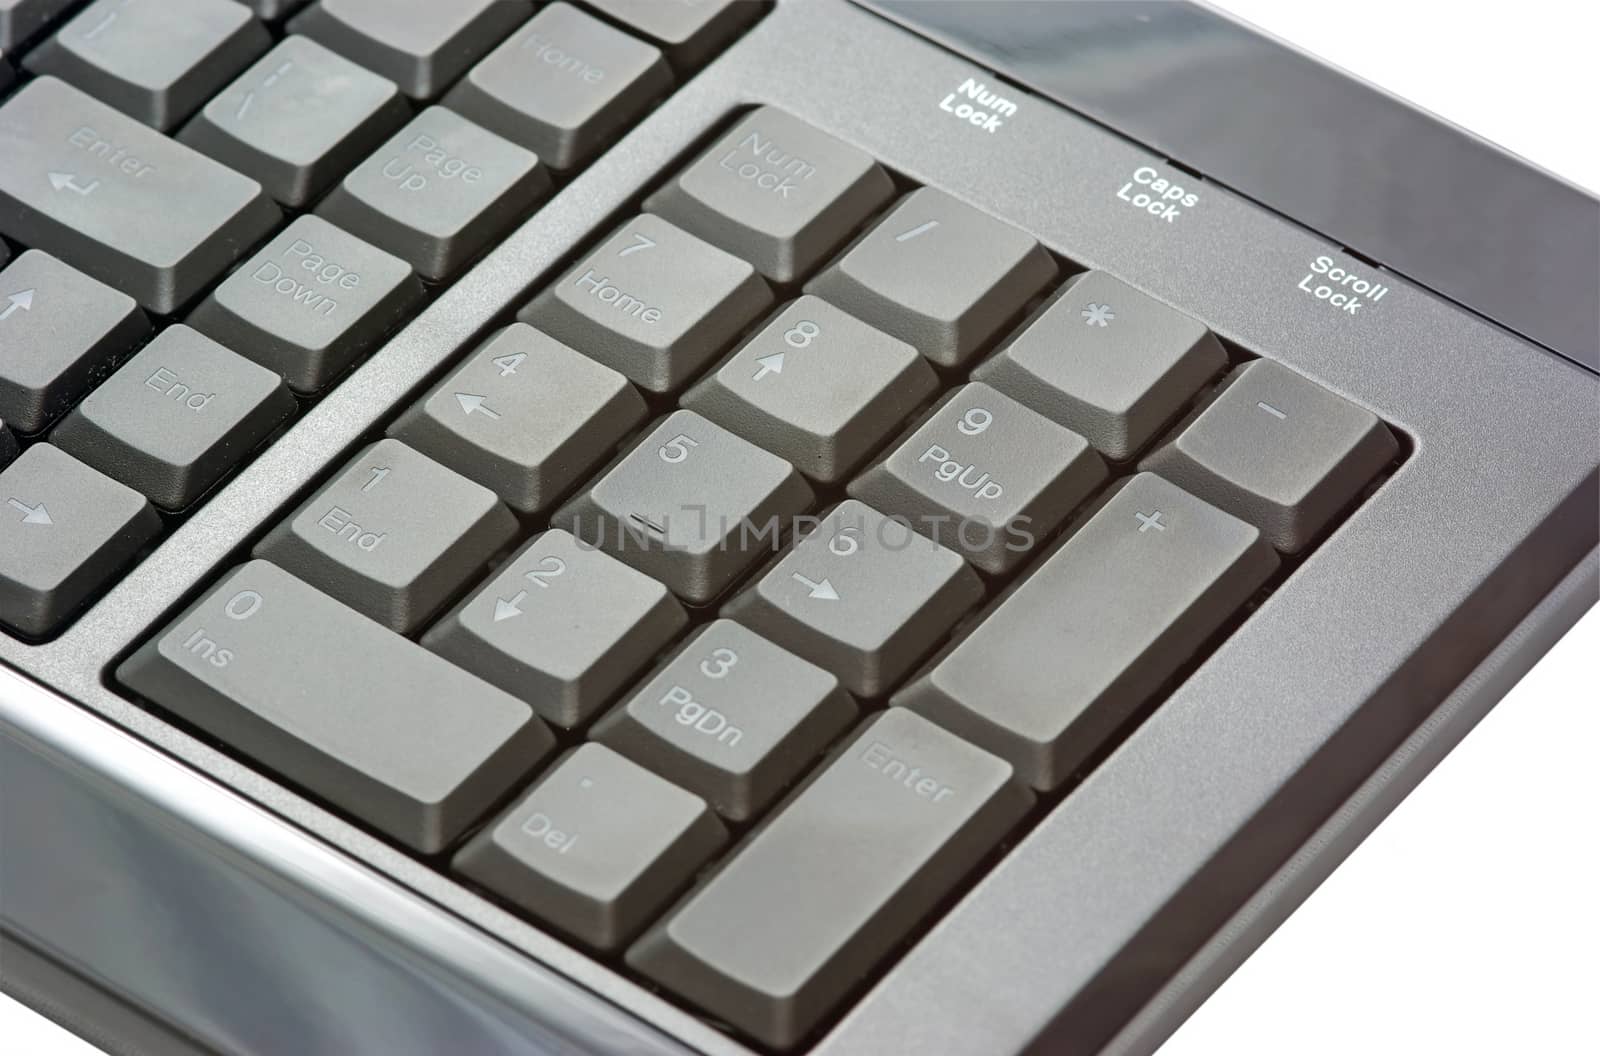 Black keyboard - number pad by savcoco